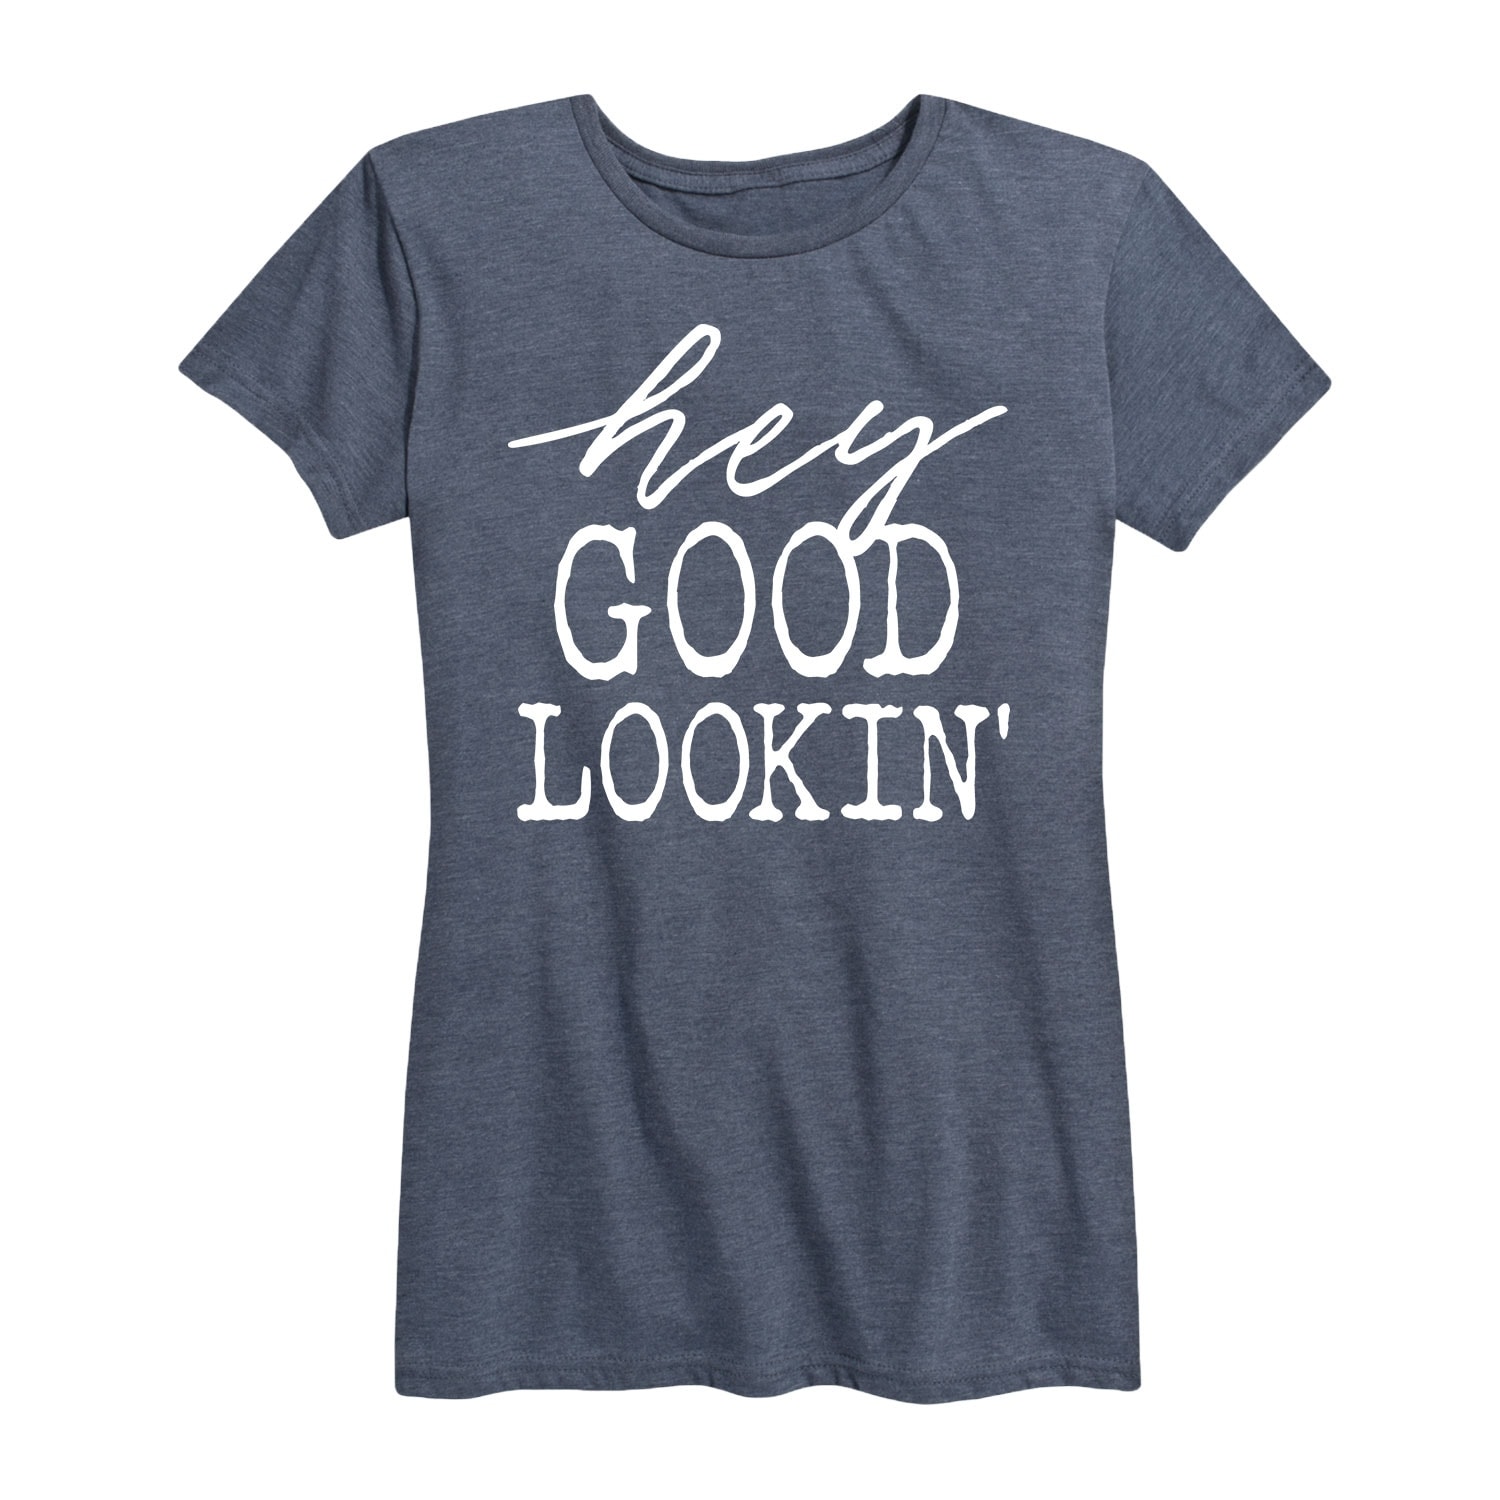 Hey Good Lookin' - Women's Short Sleeve Graphic T-Shirt